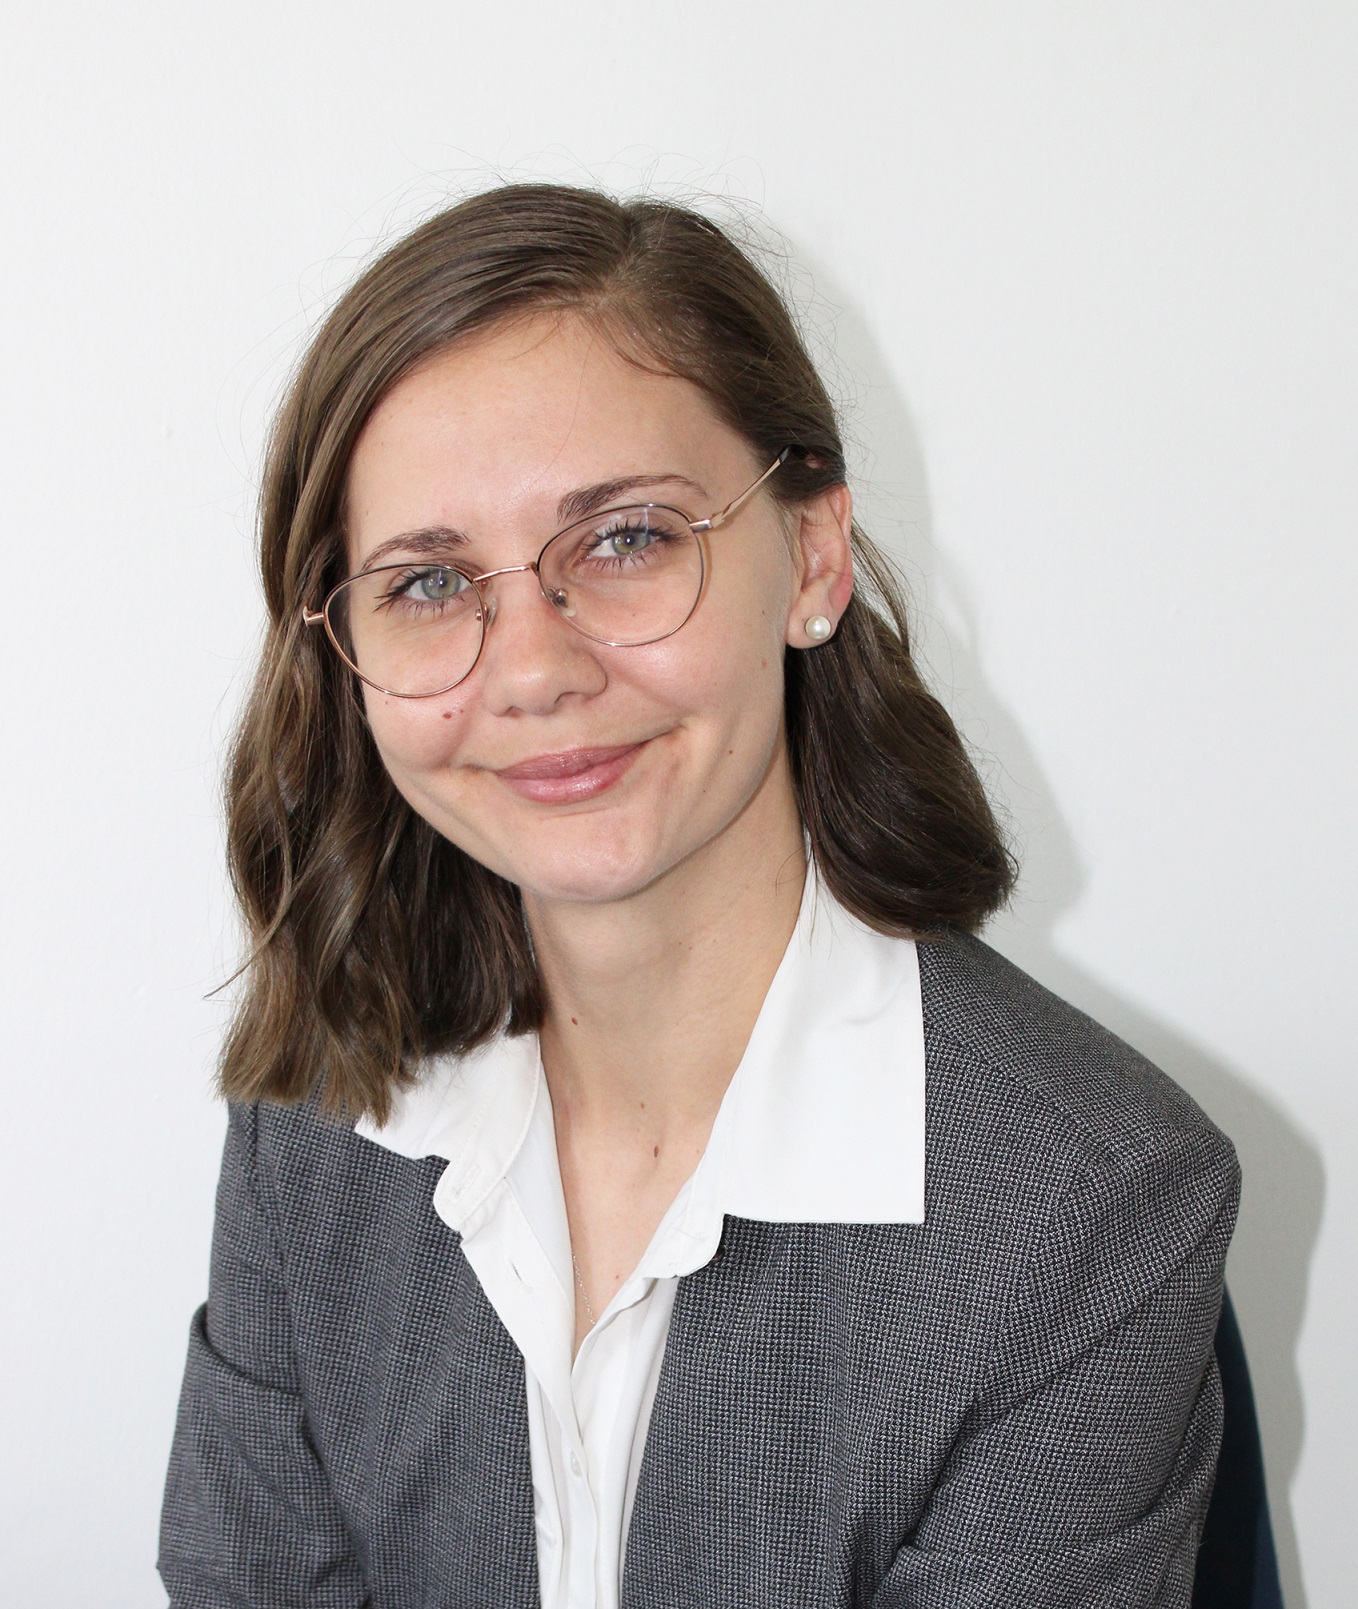 Alanicka Lotriet | Journalist